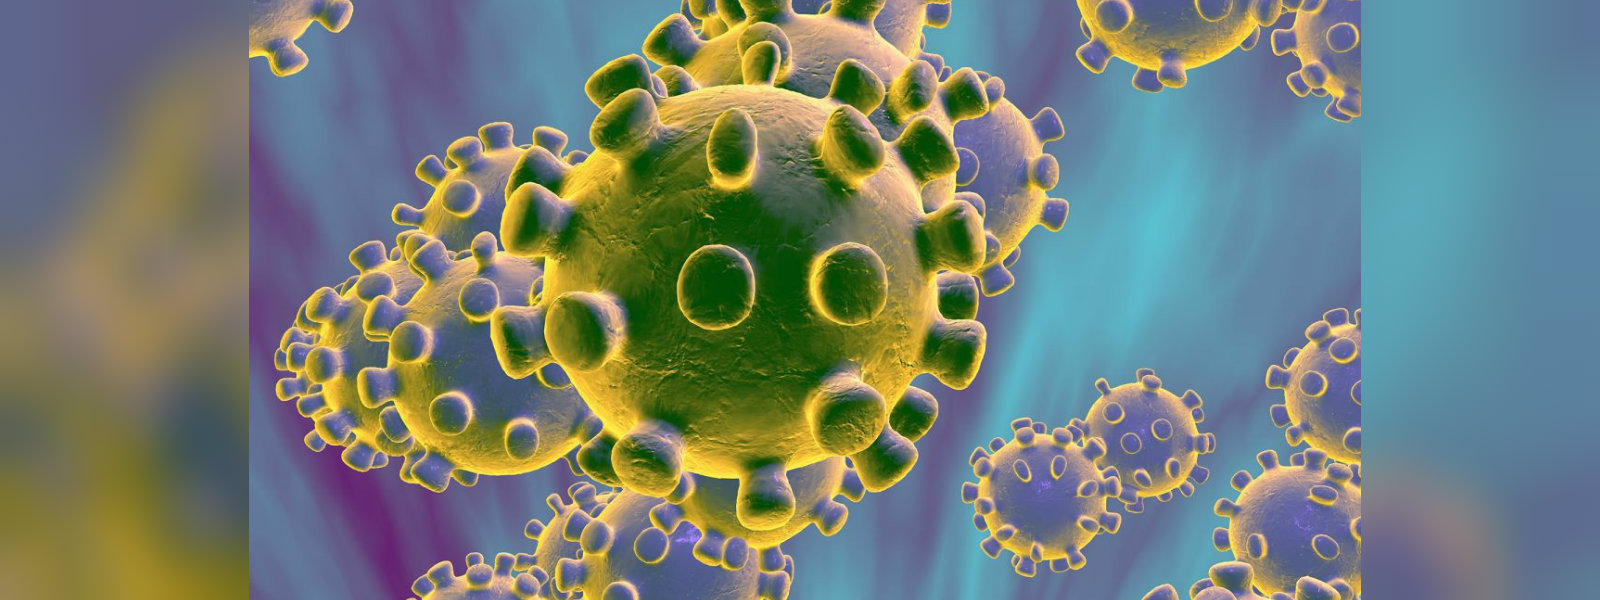 Coronavirus death toll keeps increasing